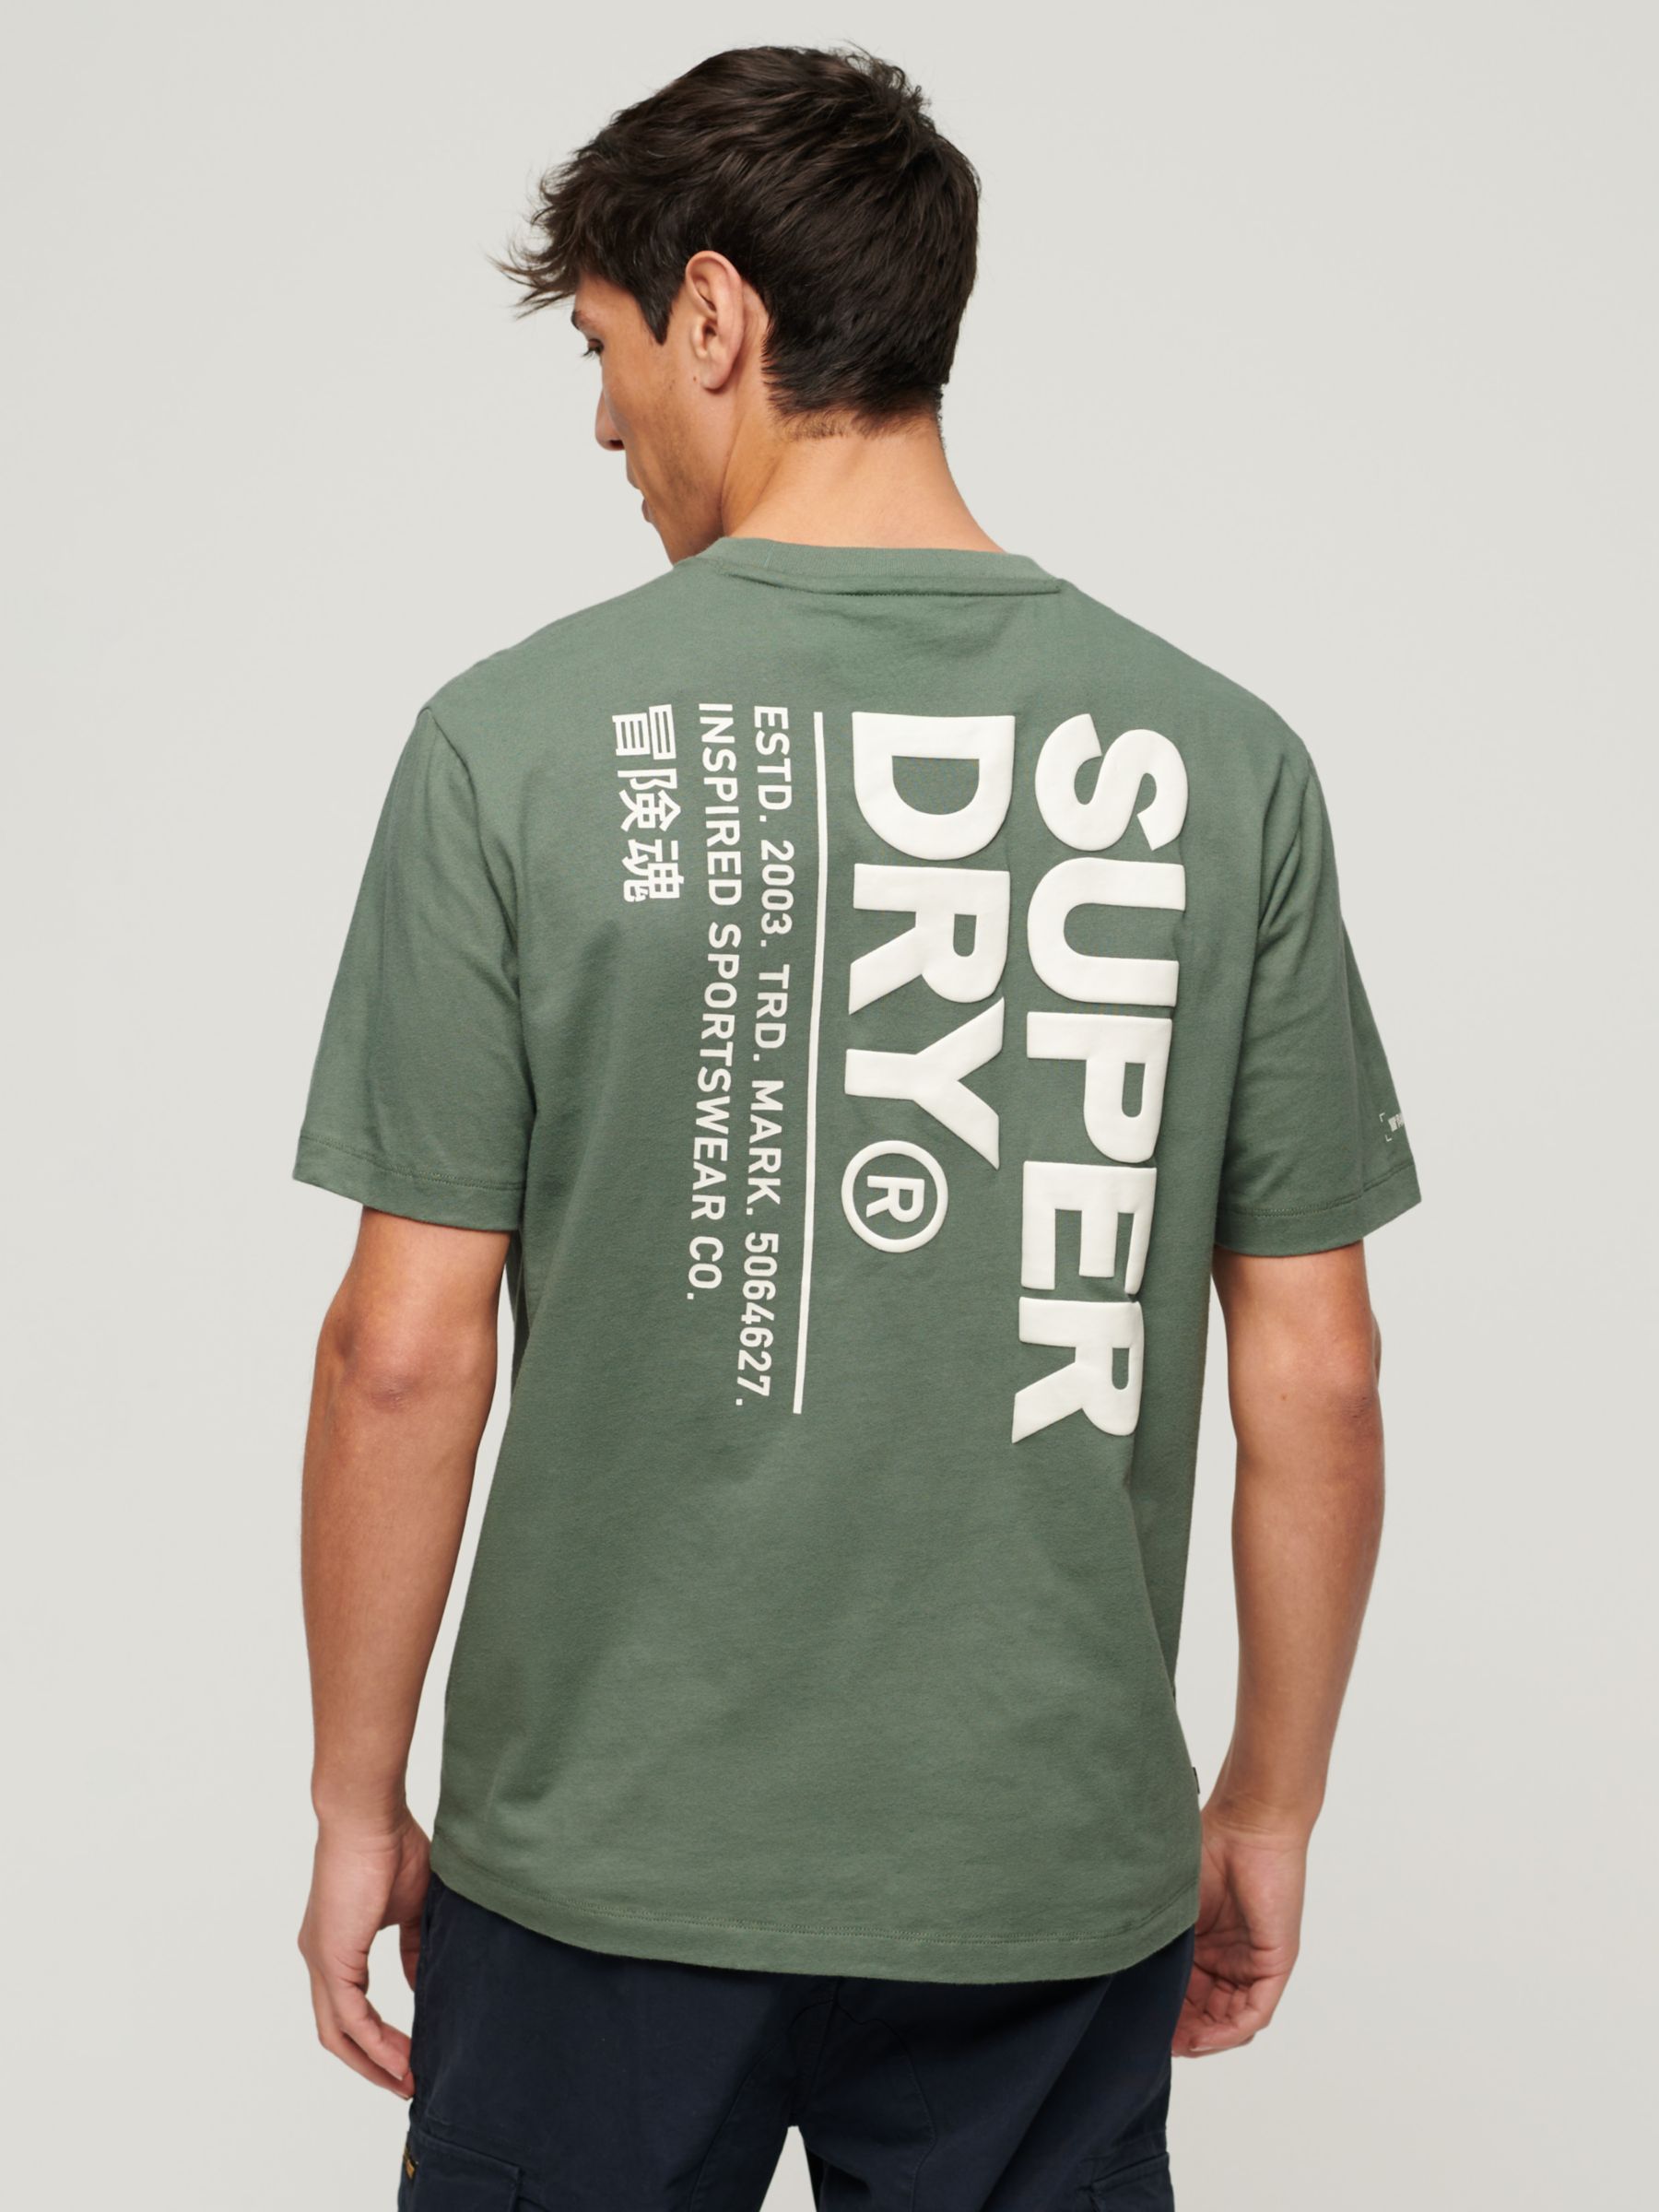 Buy Superdry Utility Sport Logo Loose Fit T-Shirt Online at johnlewis.com